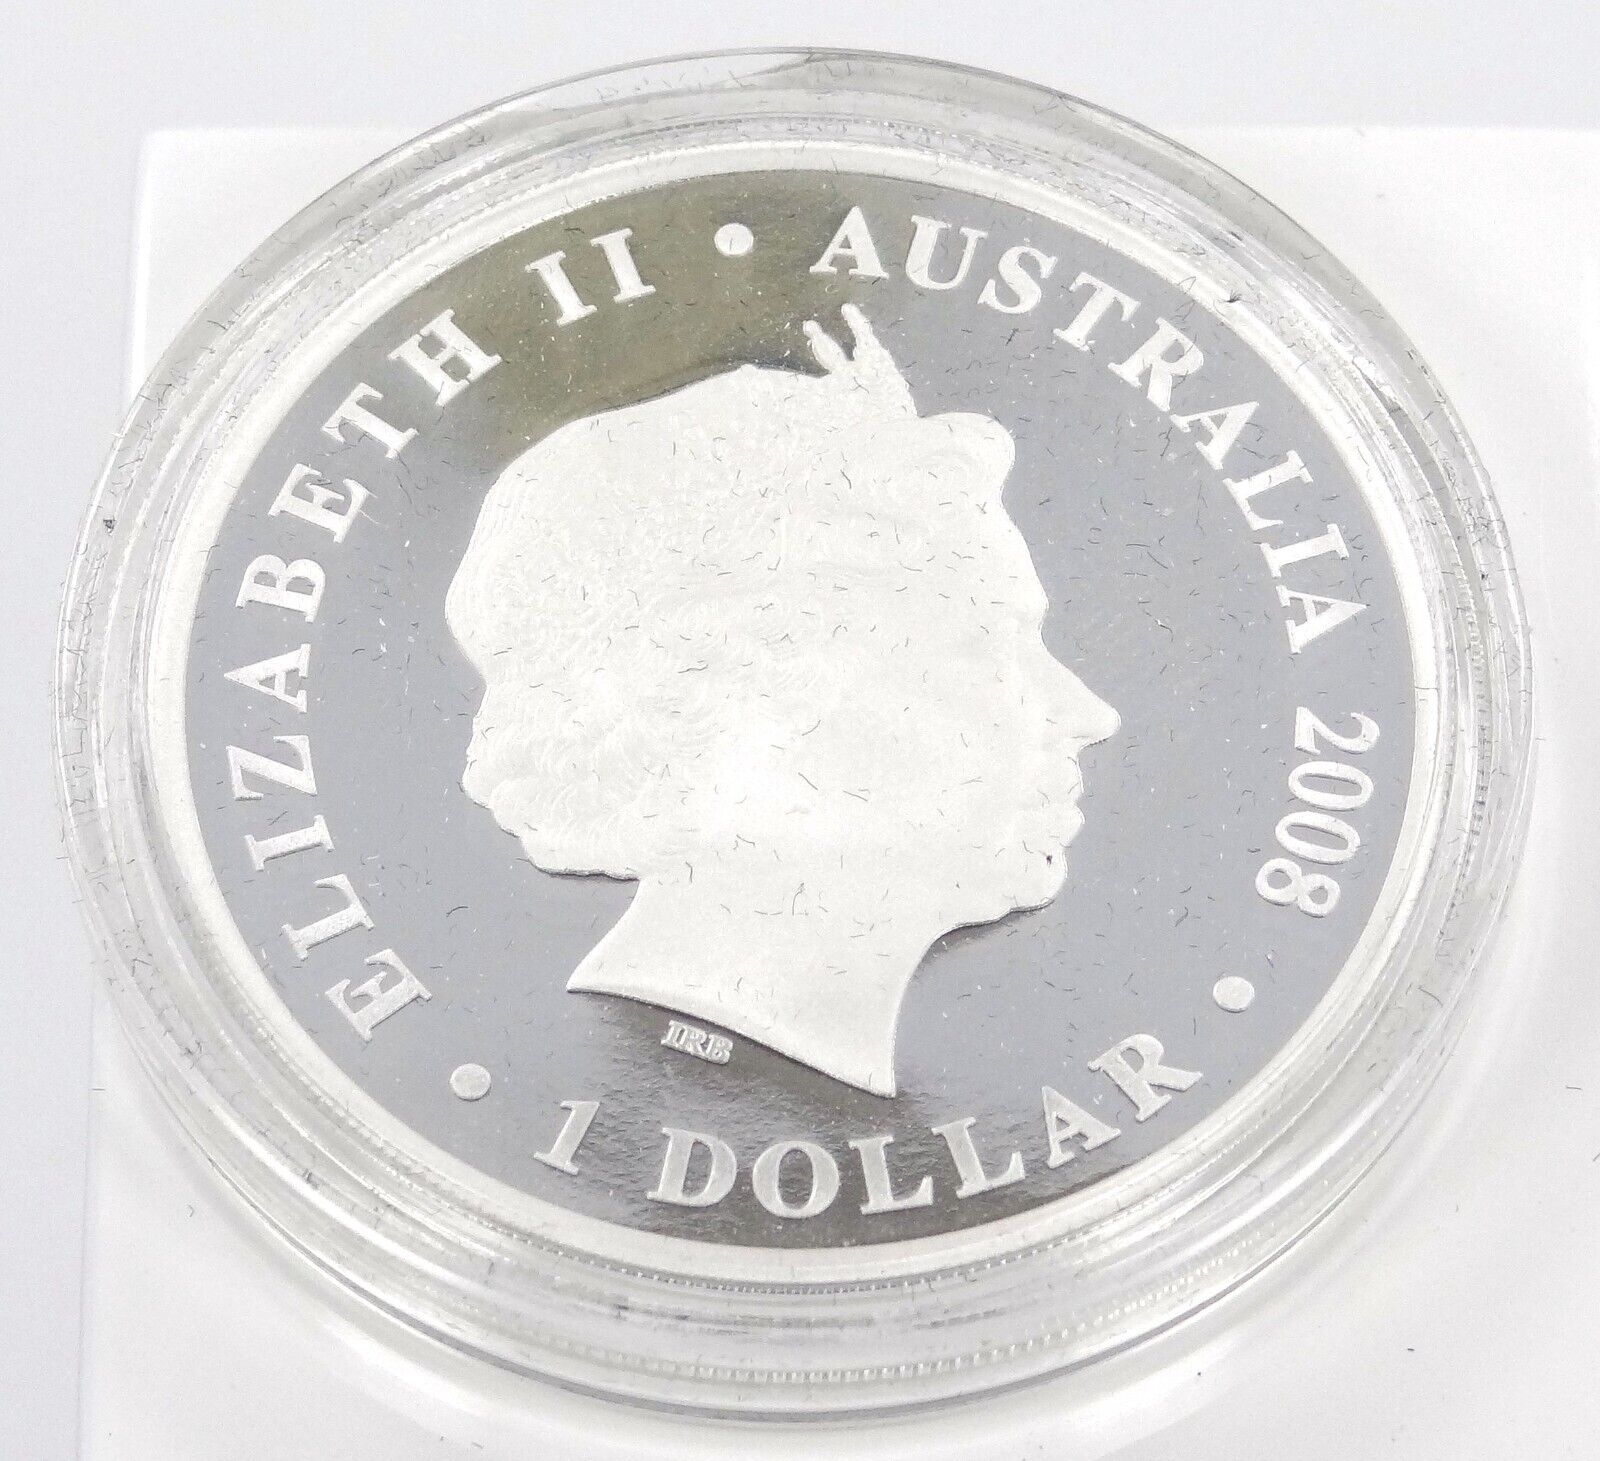 1 Oz Silver Coin 2008 $1 Australia Australian Football 150 Years Proof Coin-classypw.com-2